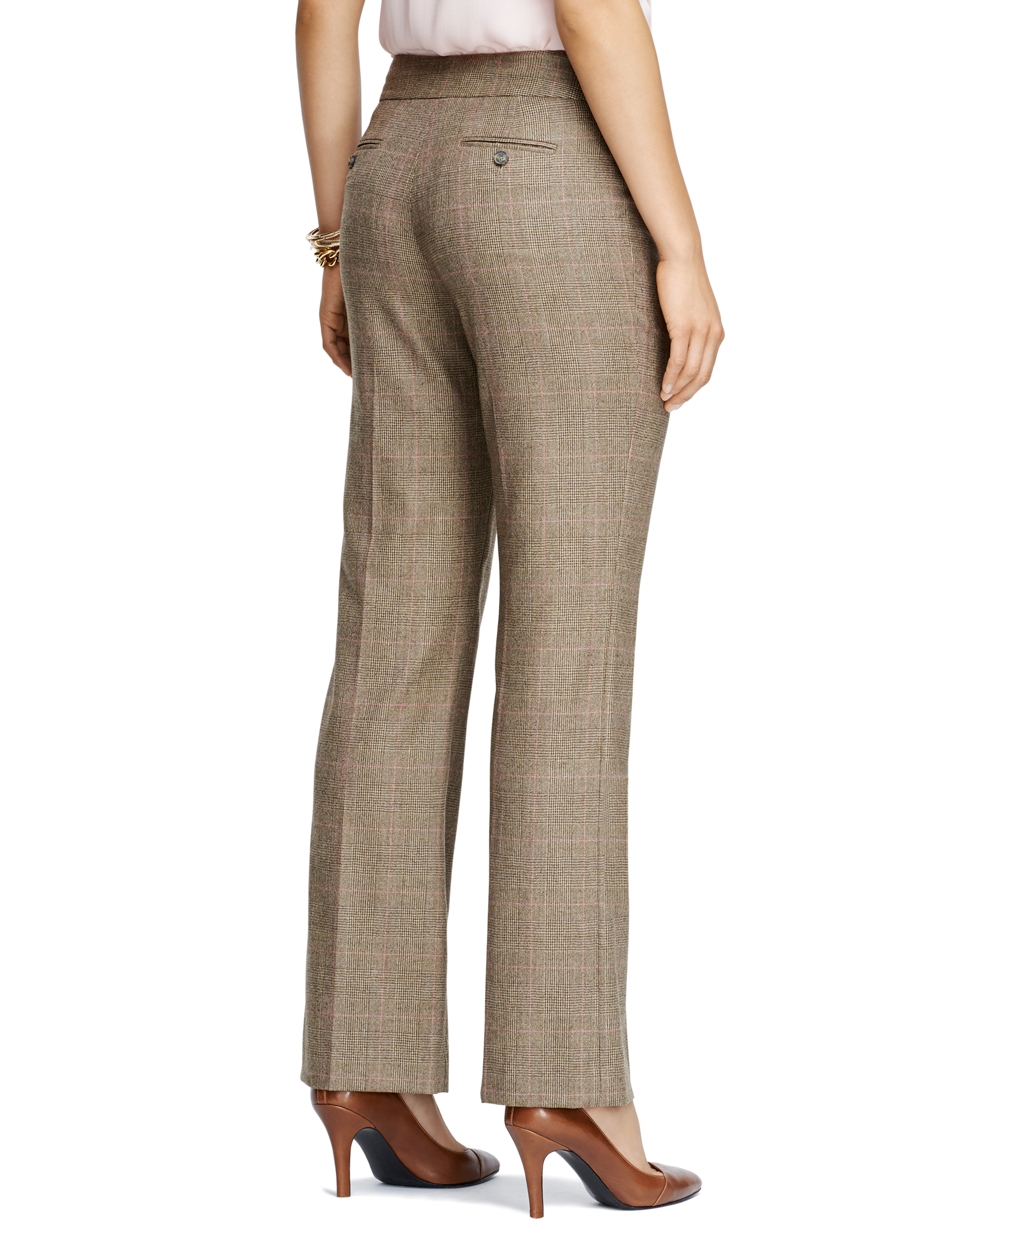 Lyst - Brooks Brothers Caroline Fit Saxxon Wool Stretch Trousers in Brown